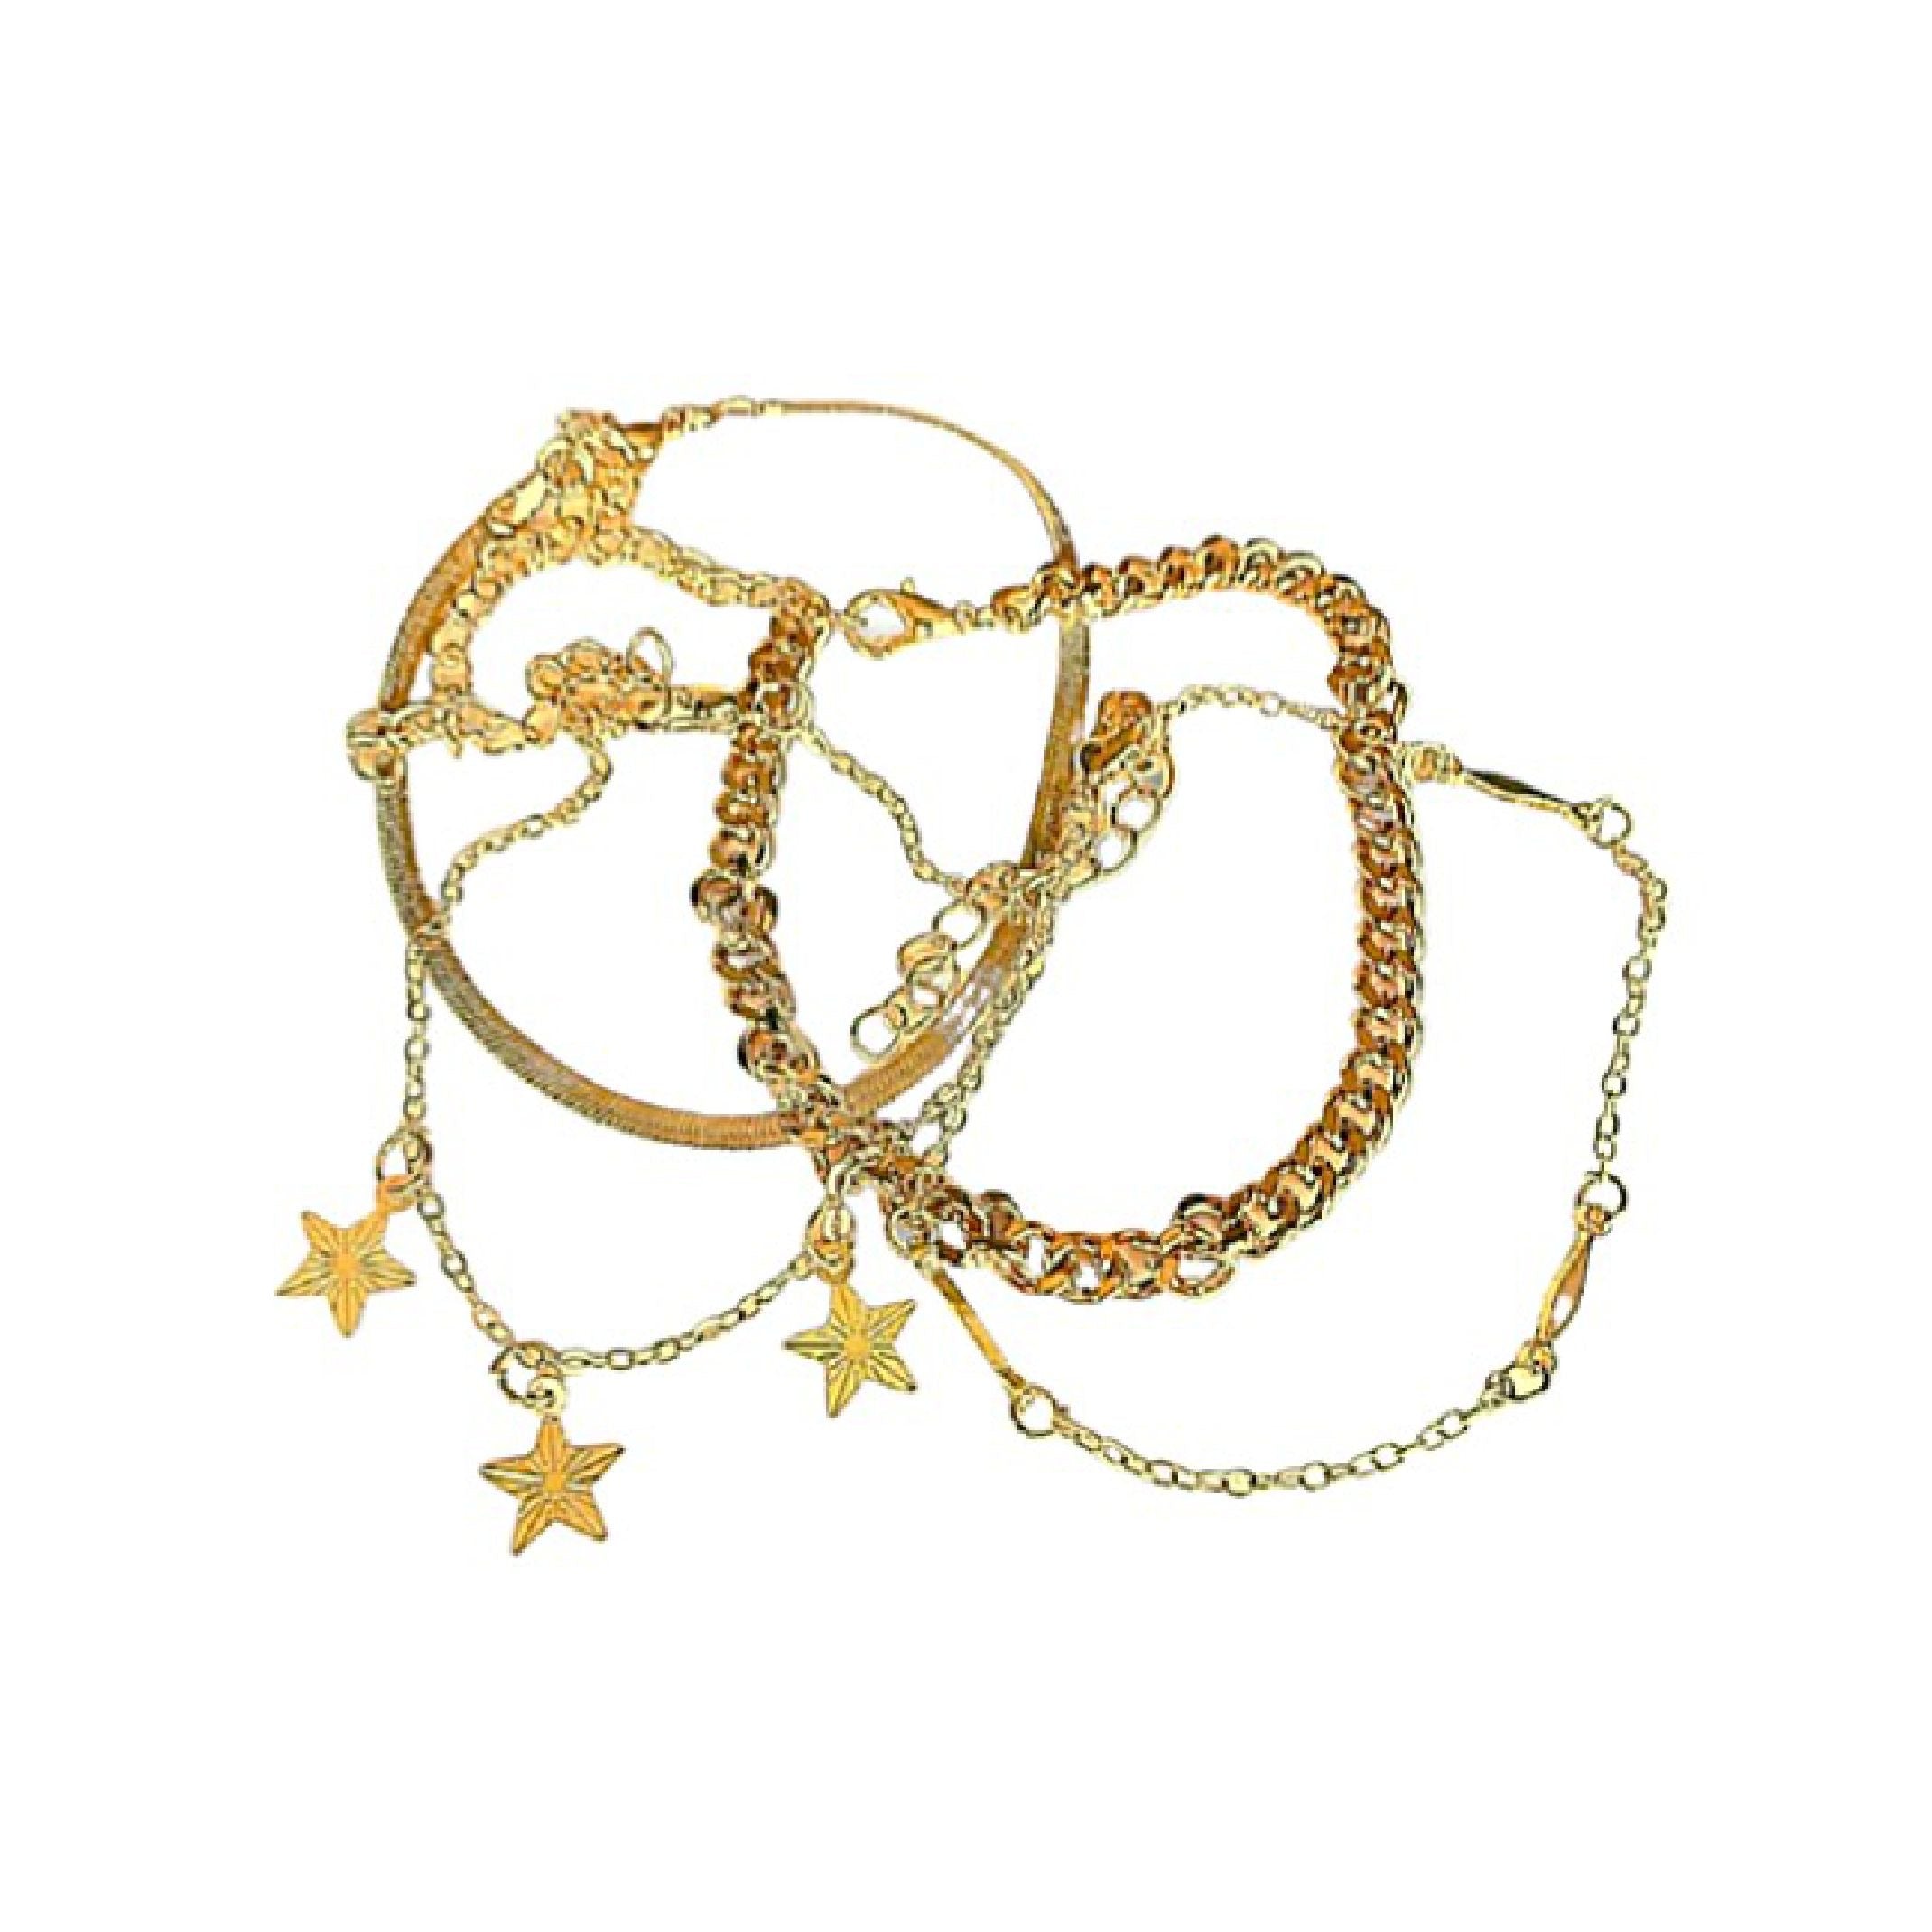 Star and snakeskin bracelet set 